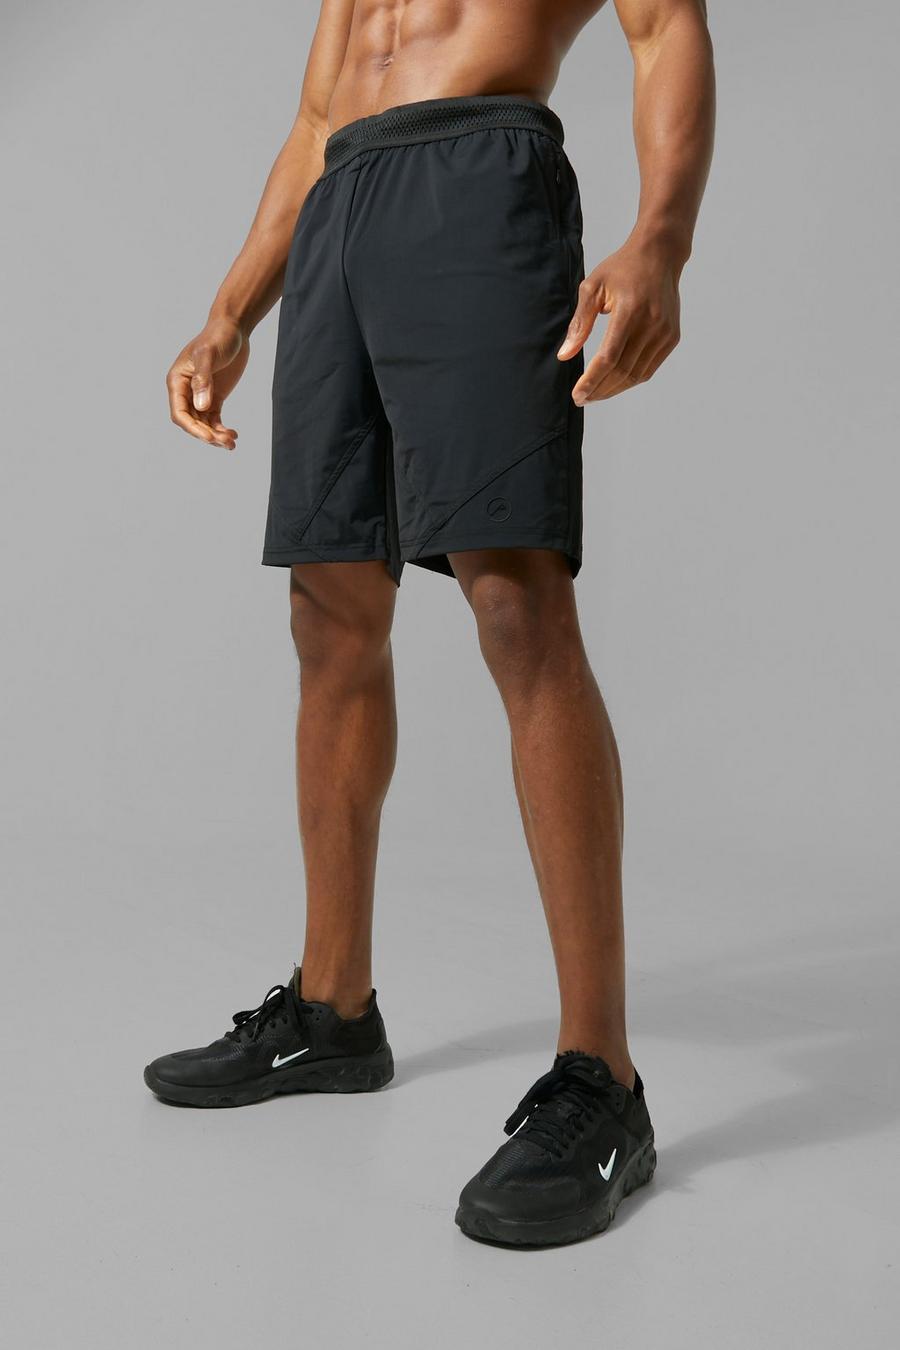 Pantaloncini Man Active Ultra Stretch, Black nero